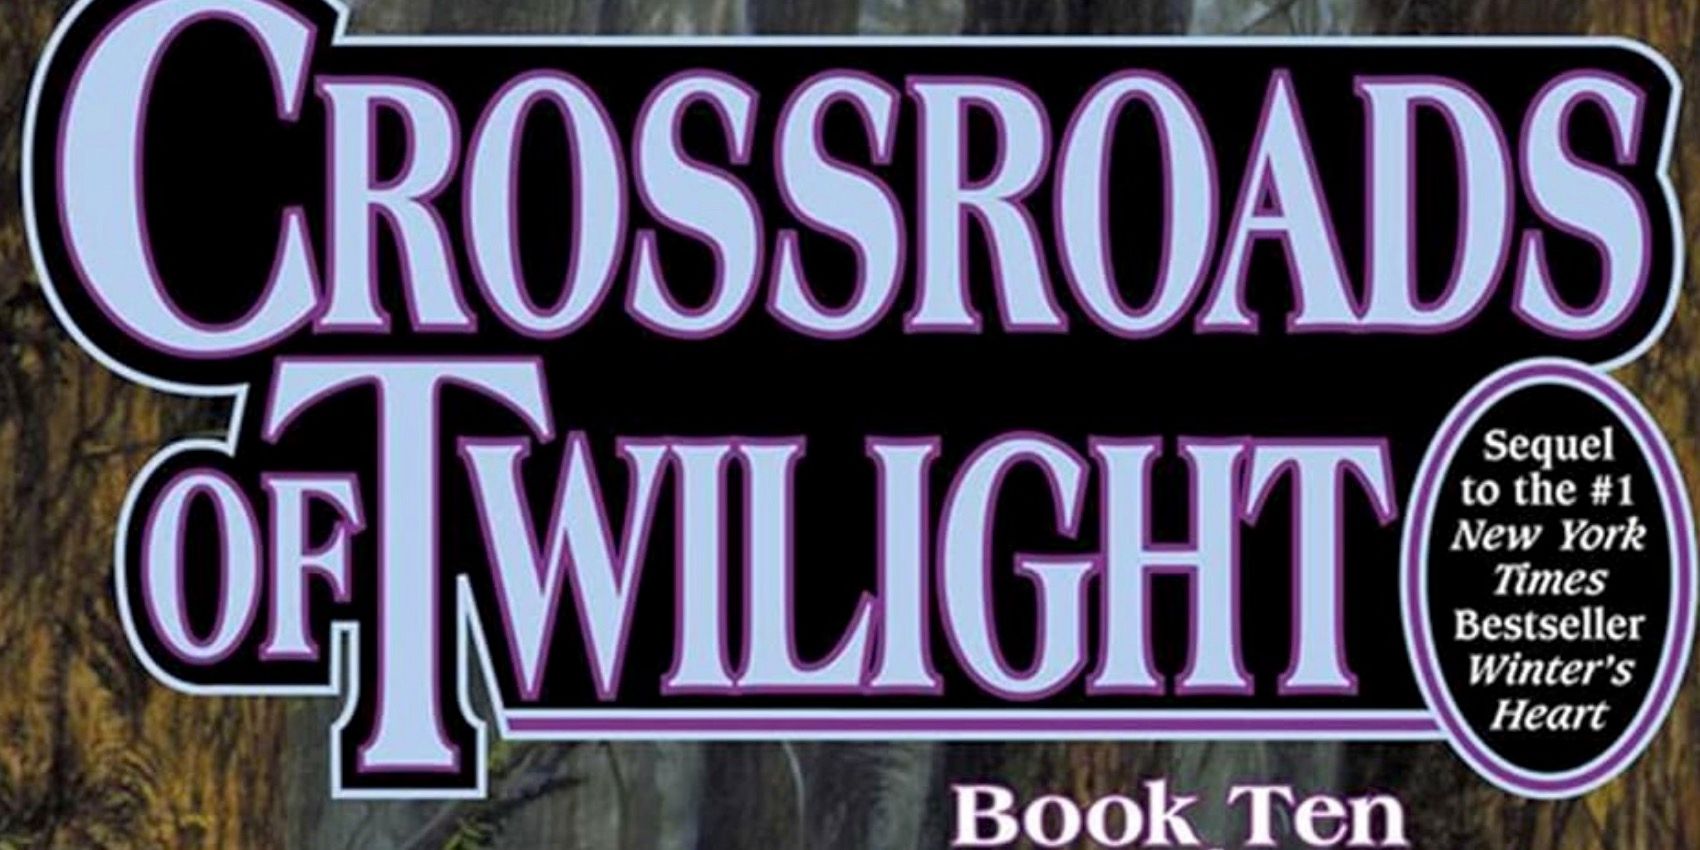 The cover of Crossroads of Twilight by Robert Jordan.